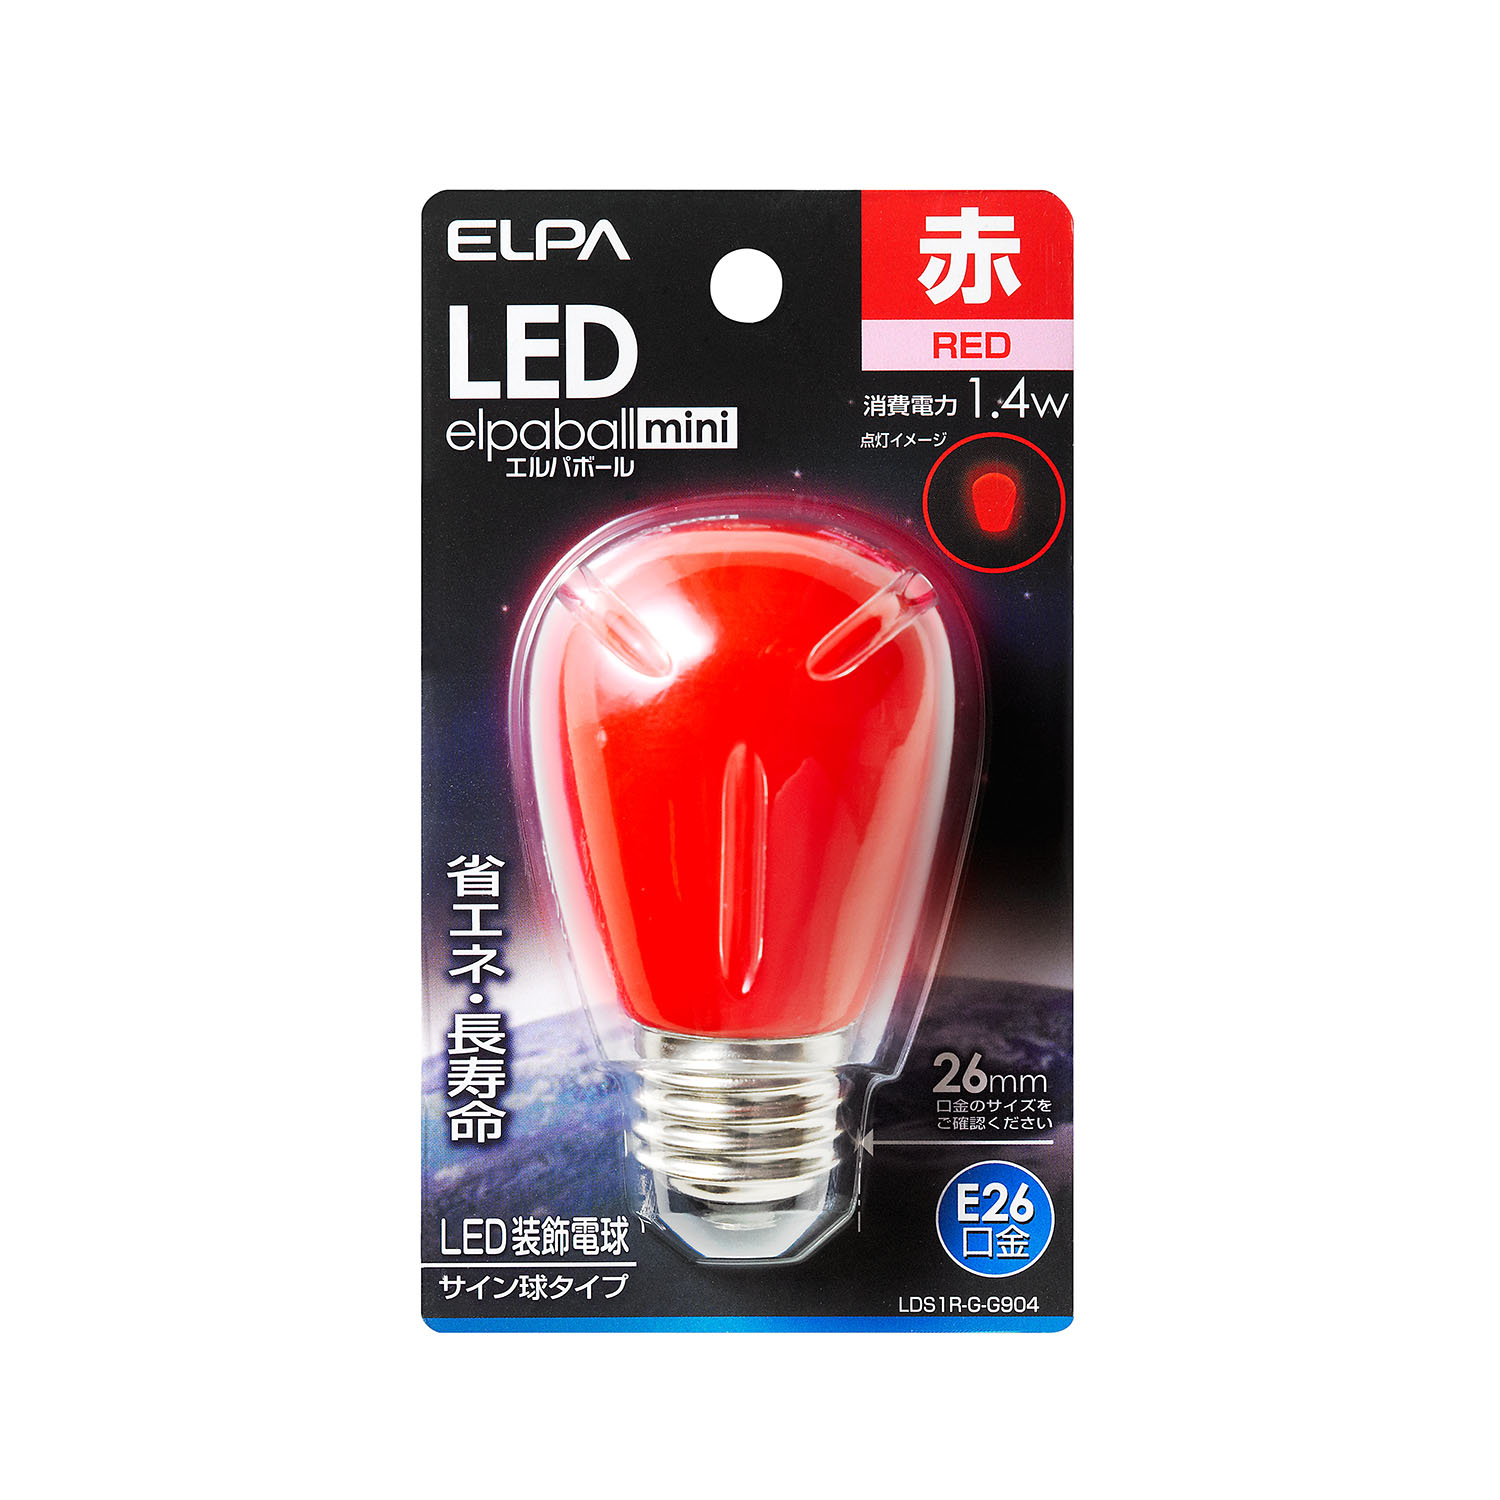 LDS1R-G-G904 | ランプ | ELPA 朝日電器 LED電球エルパボールmini 装飾